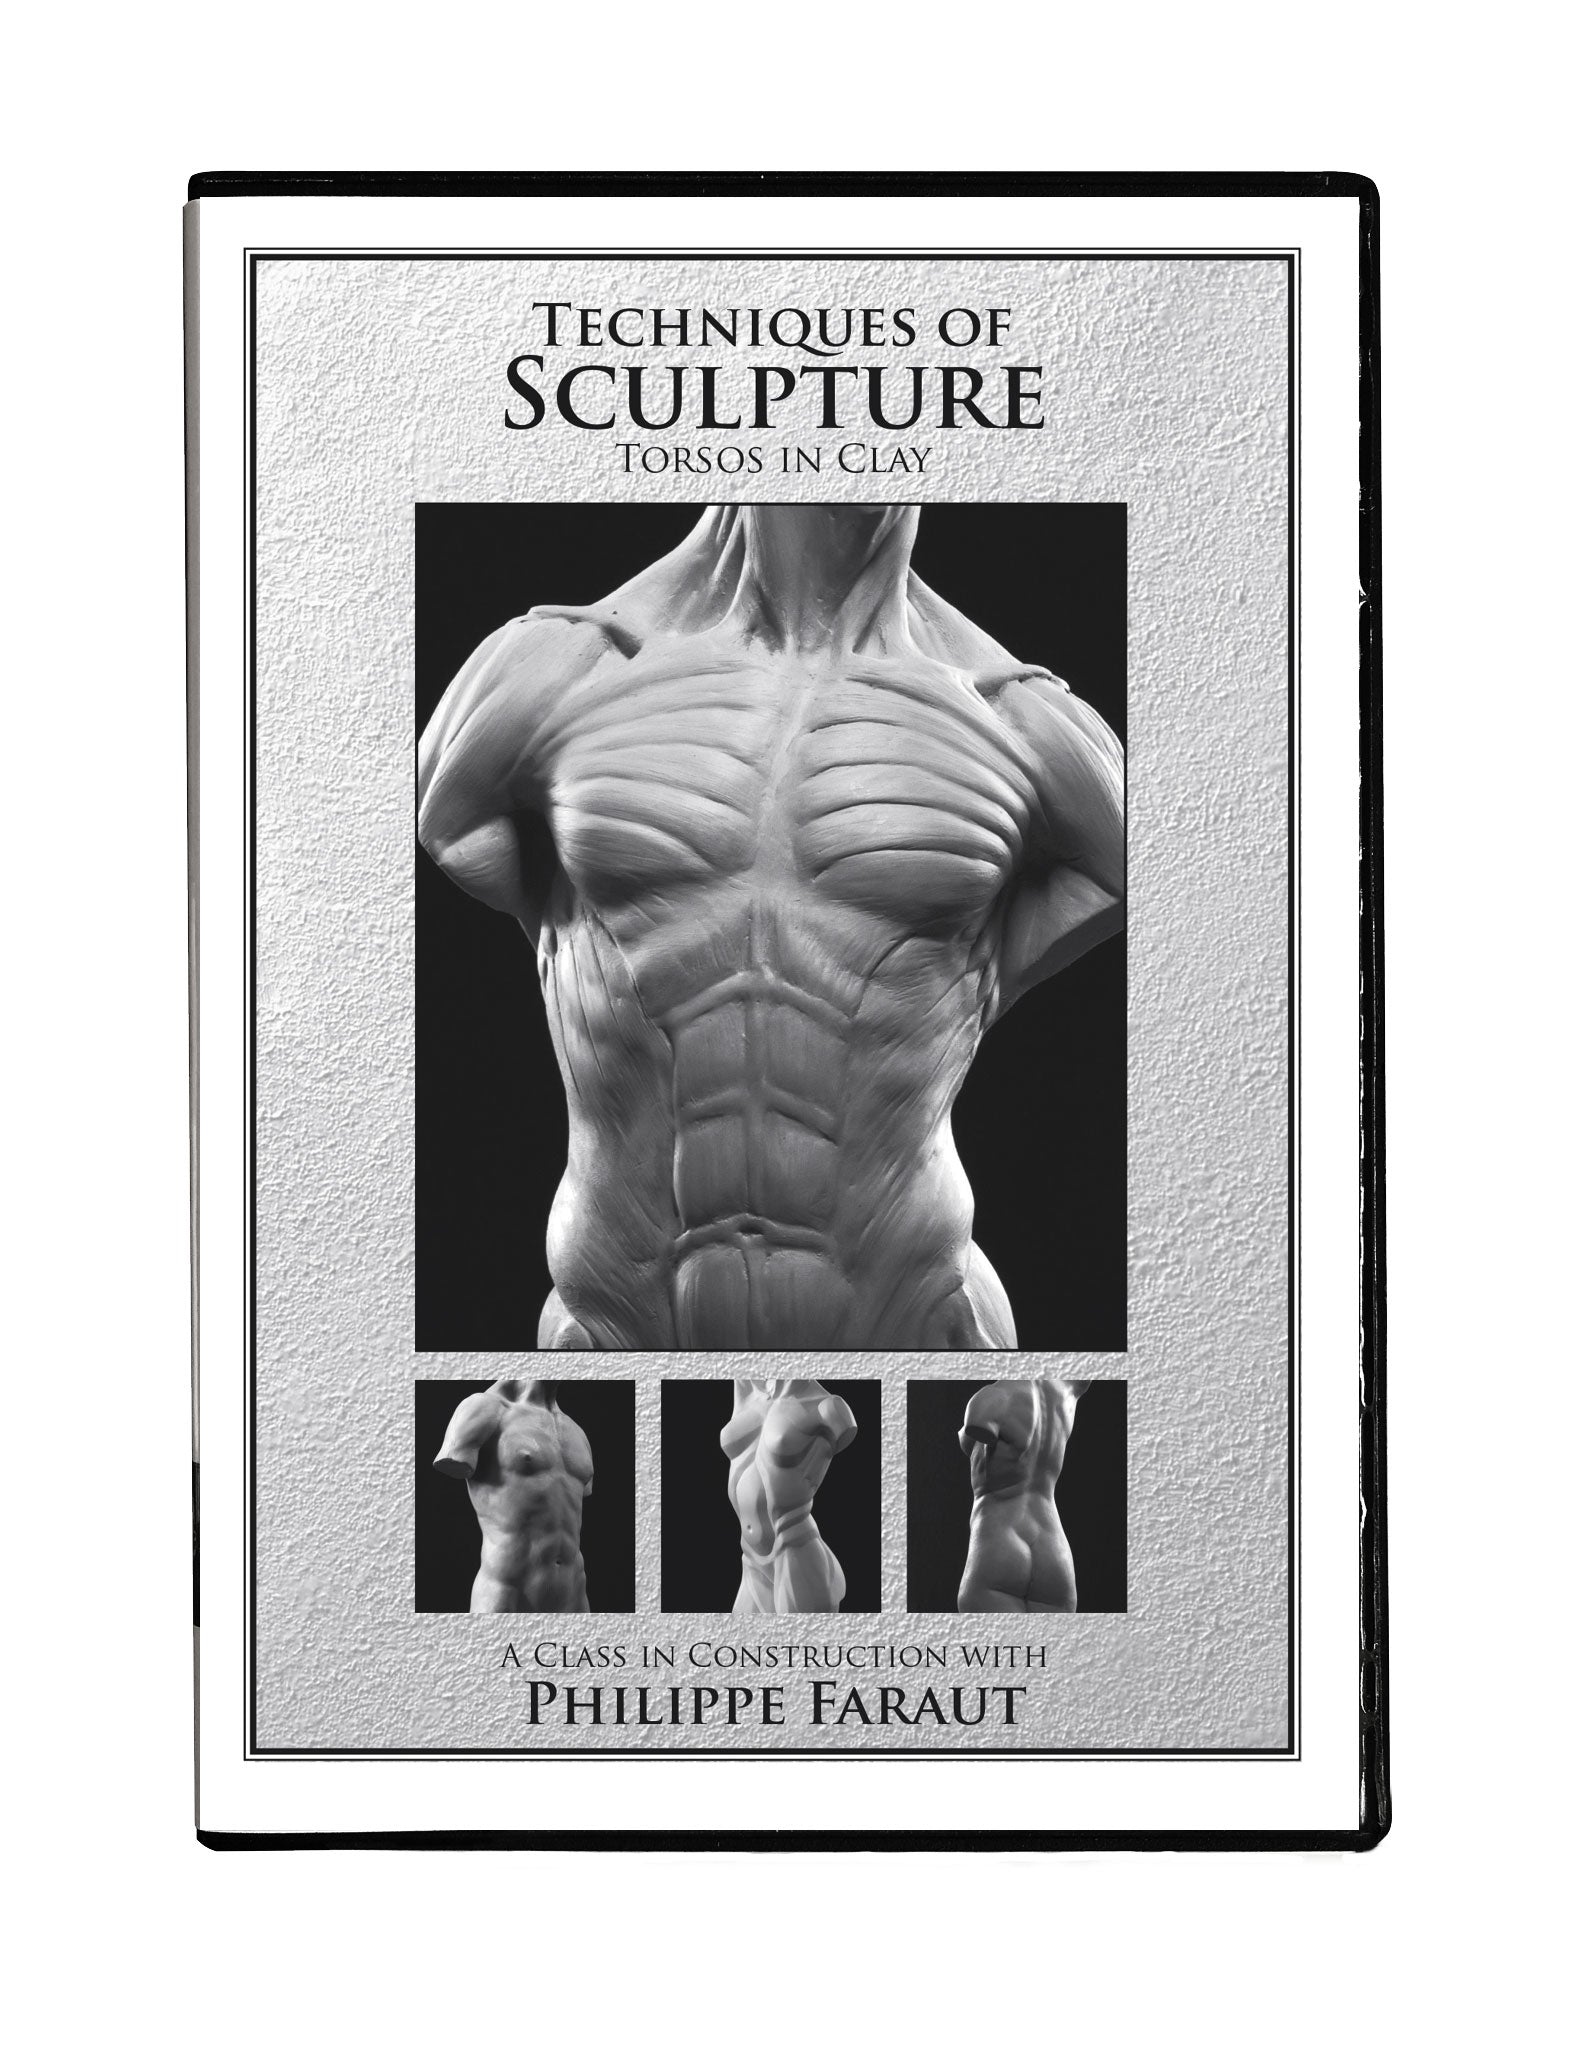 DVD techniques of sculpture volume 2 torsos in clay Philippe Faraut 